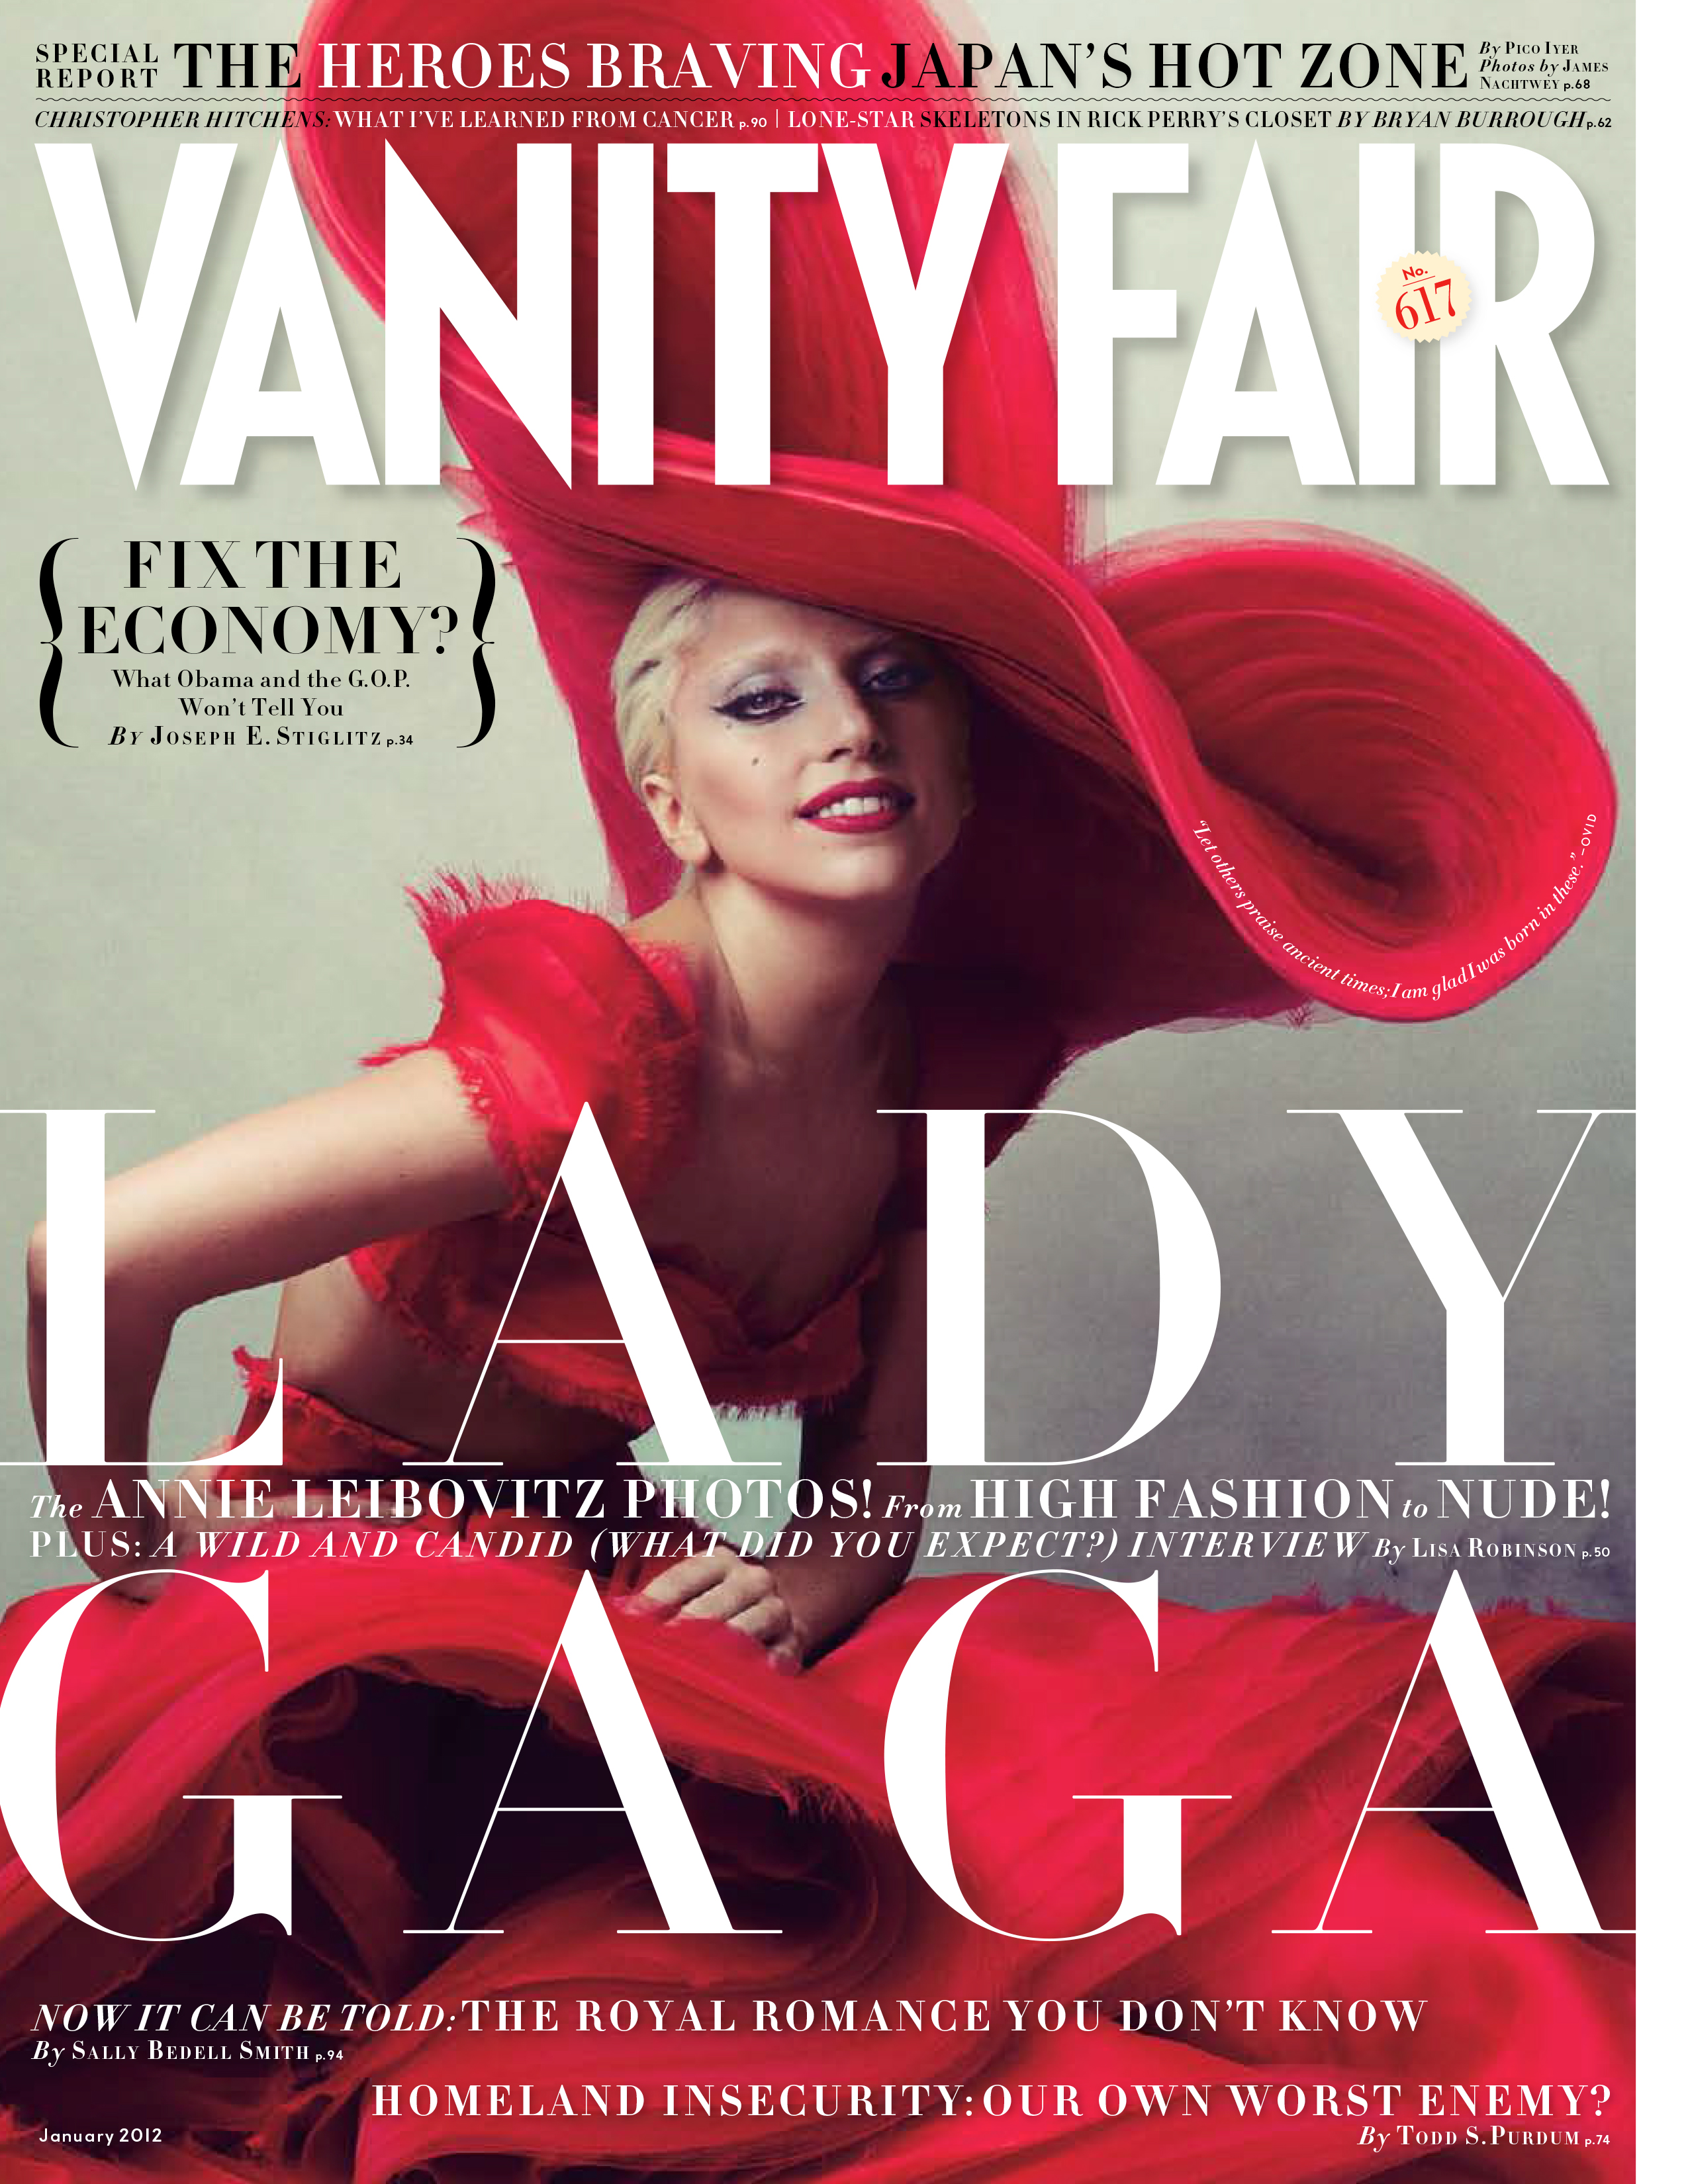 Vanity Fair-January 2012: "Lady Gaga"